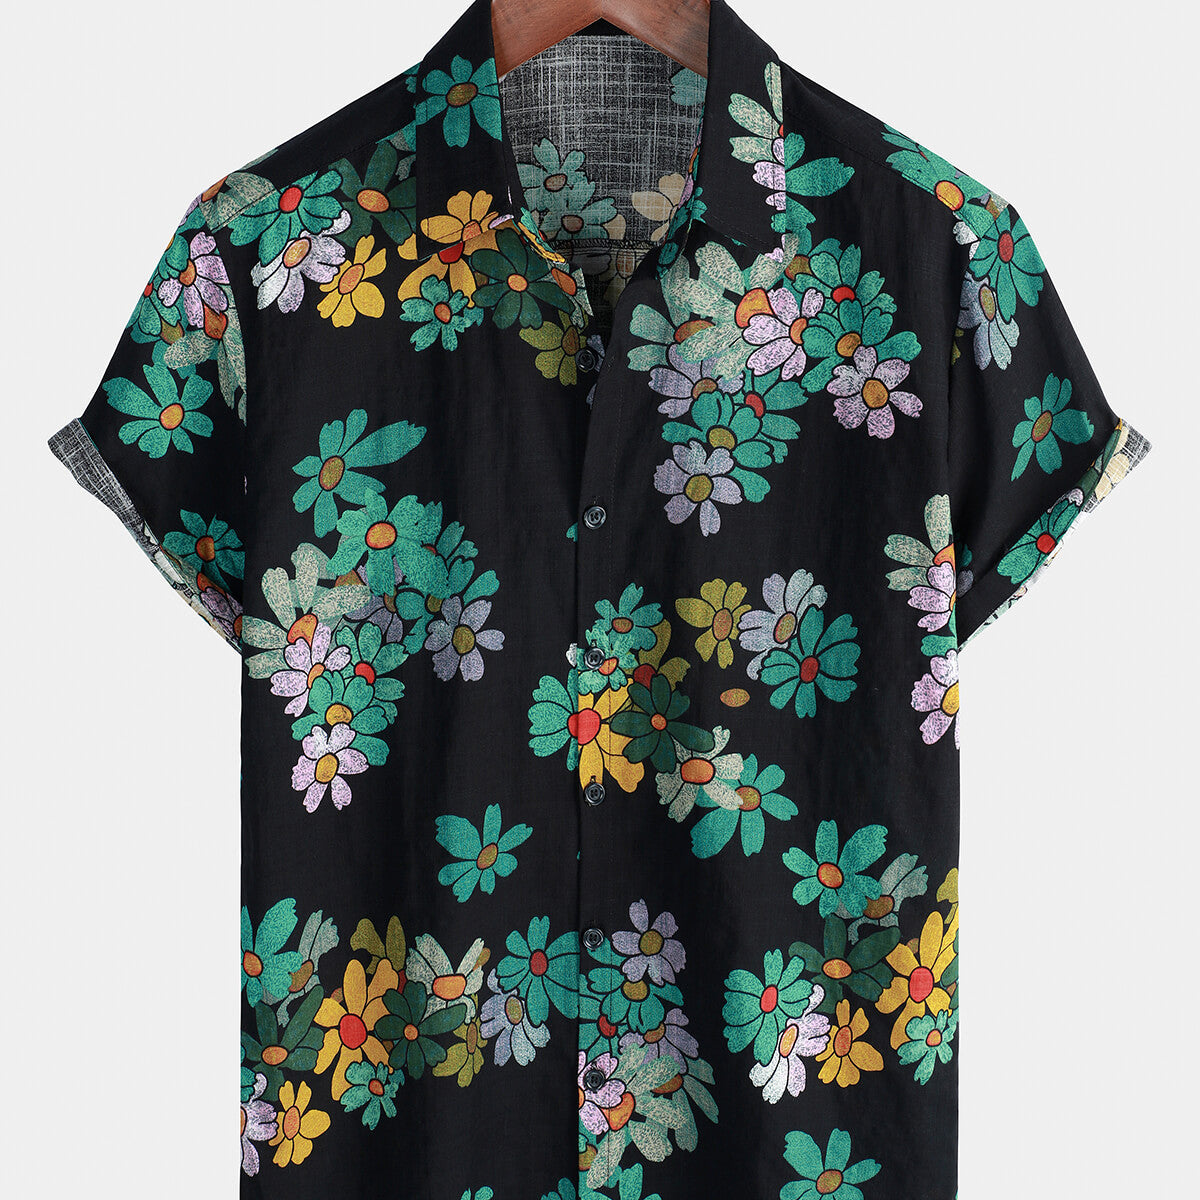 Men's Casual Holiday Cotton Cool Hawaiian Floral Button Up Short Sleeve Shirt